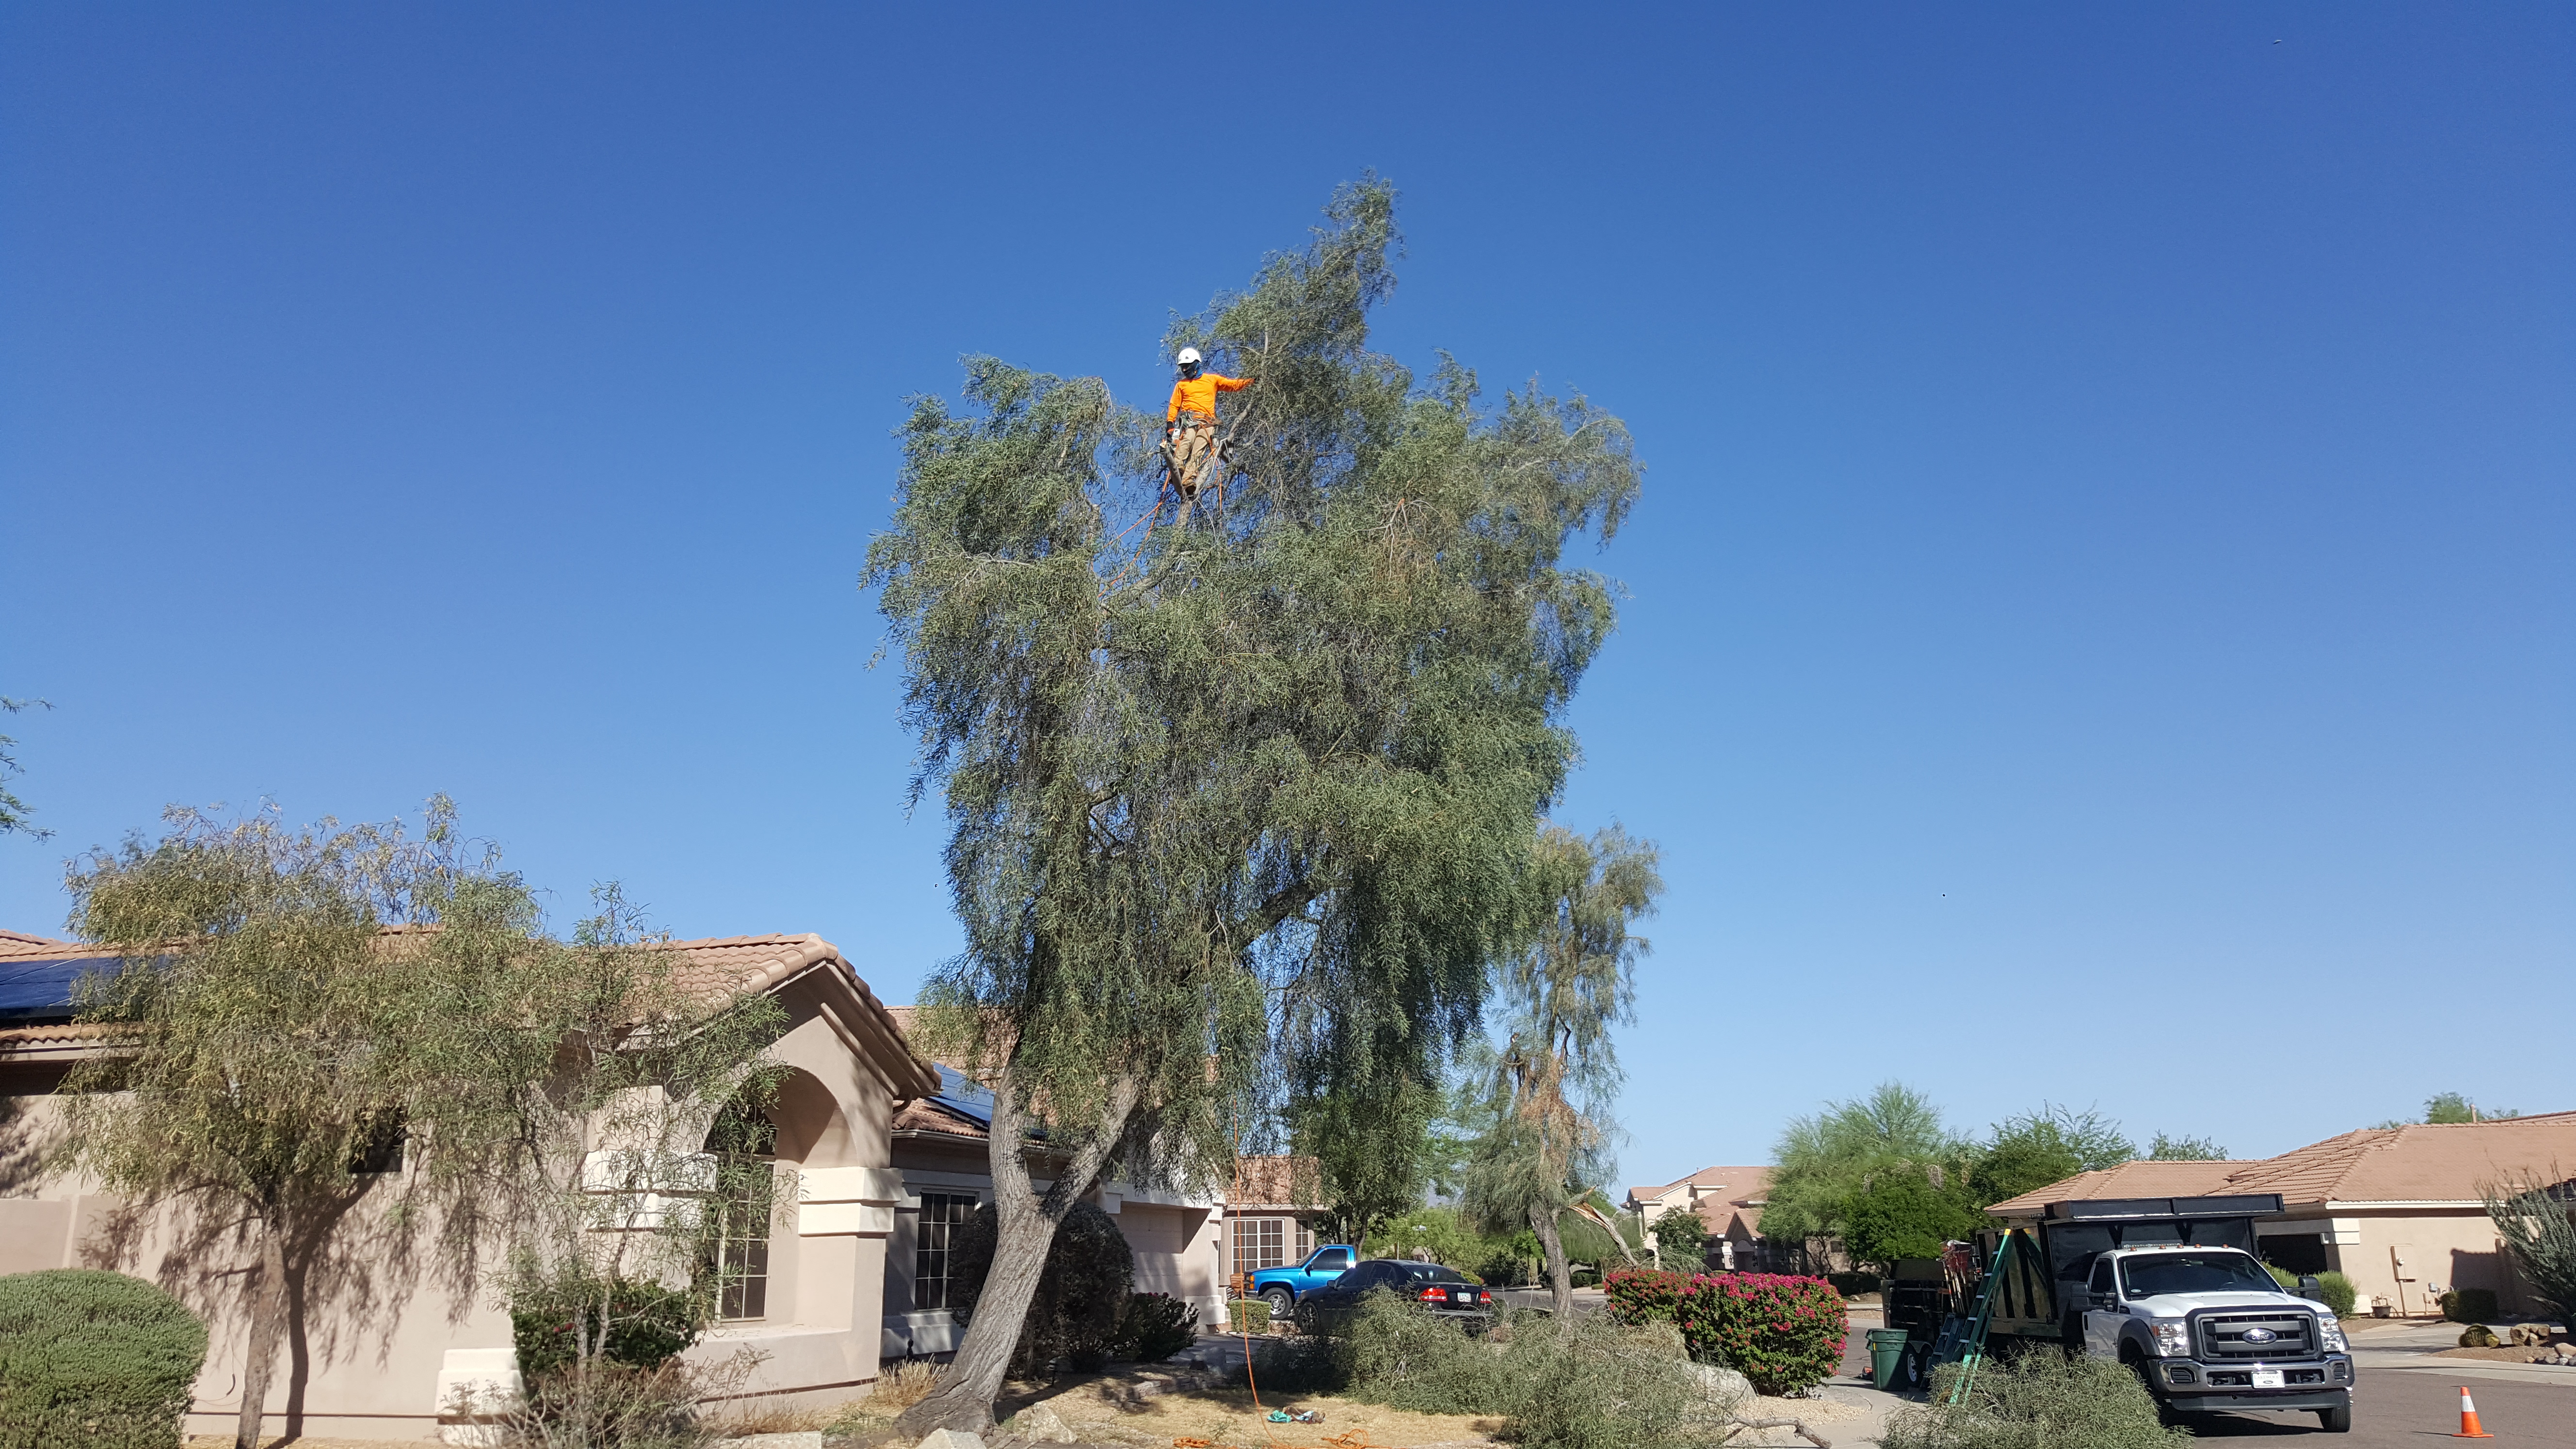 Tree Trimming Companies in Scottsdale Arizona